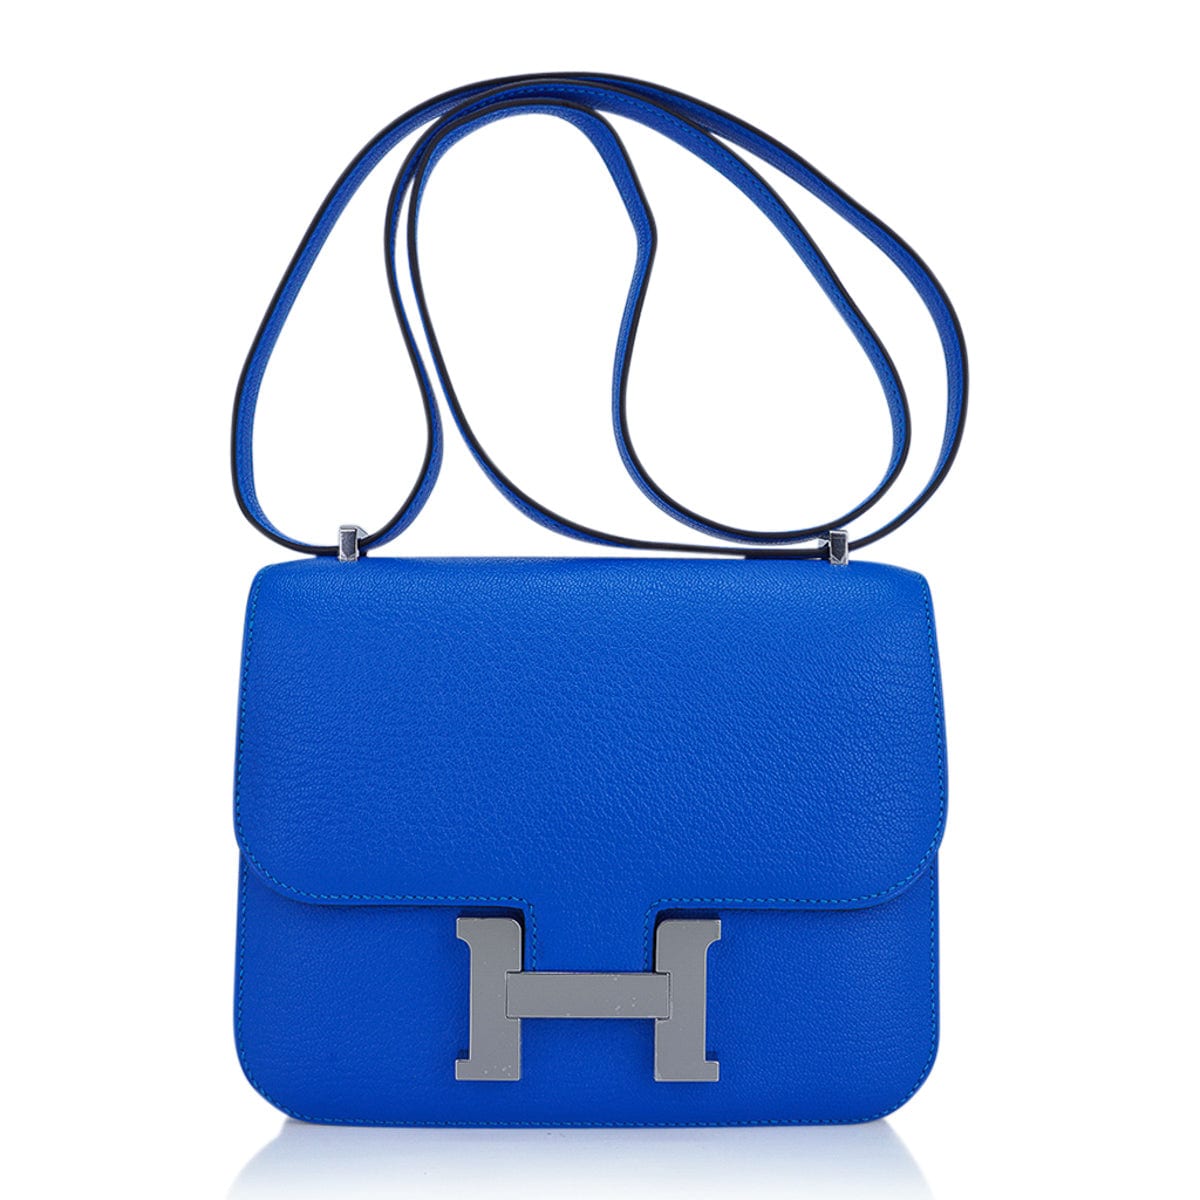 Hermes Blue Jean 35cm Birkin Leather Palladium Tote Satchel Chic and Sporty